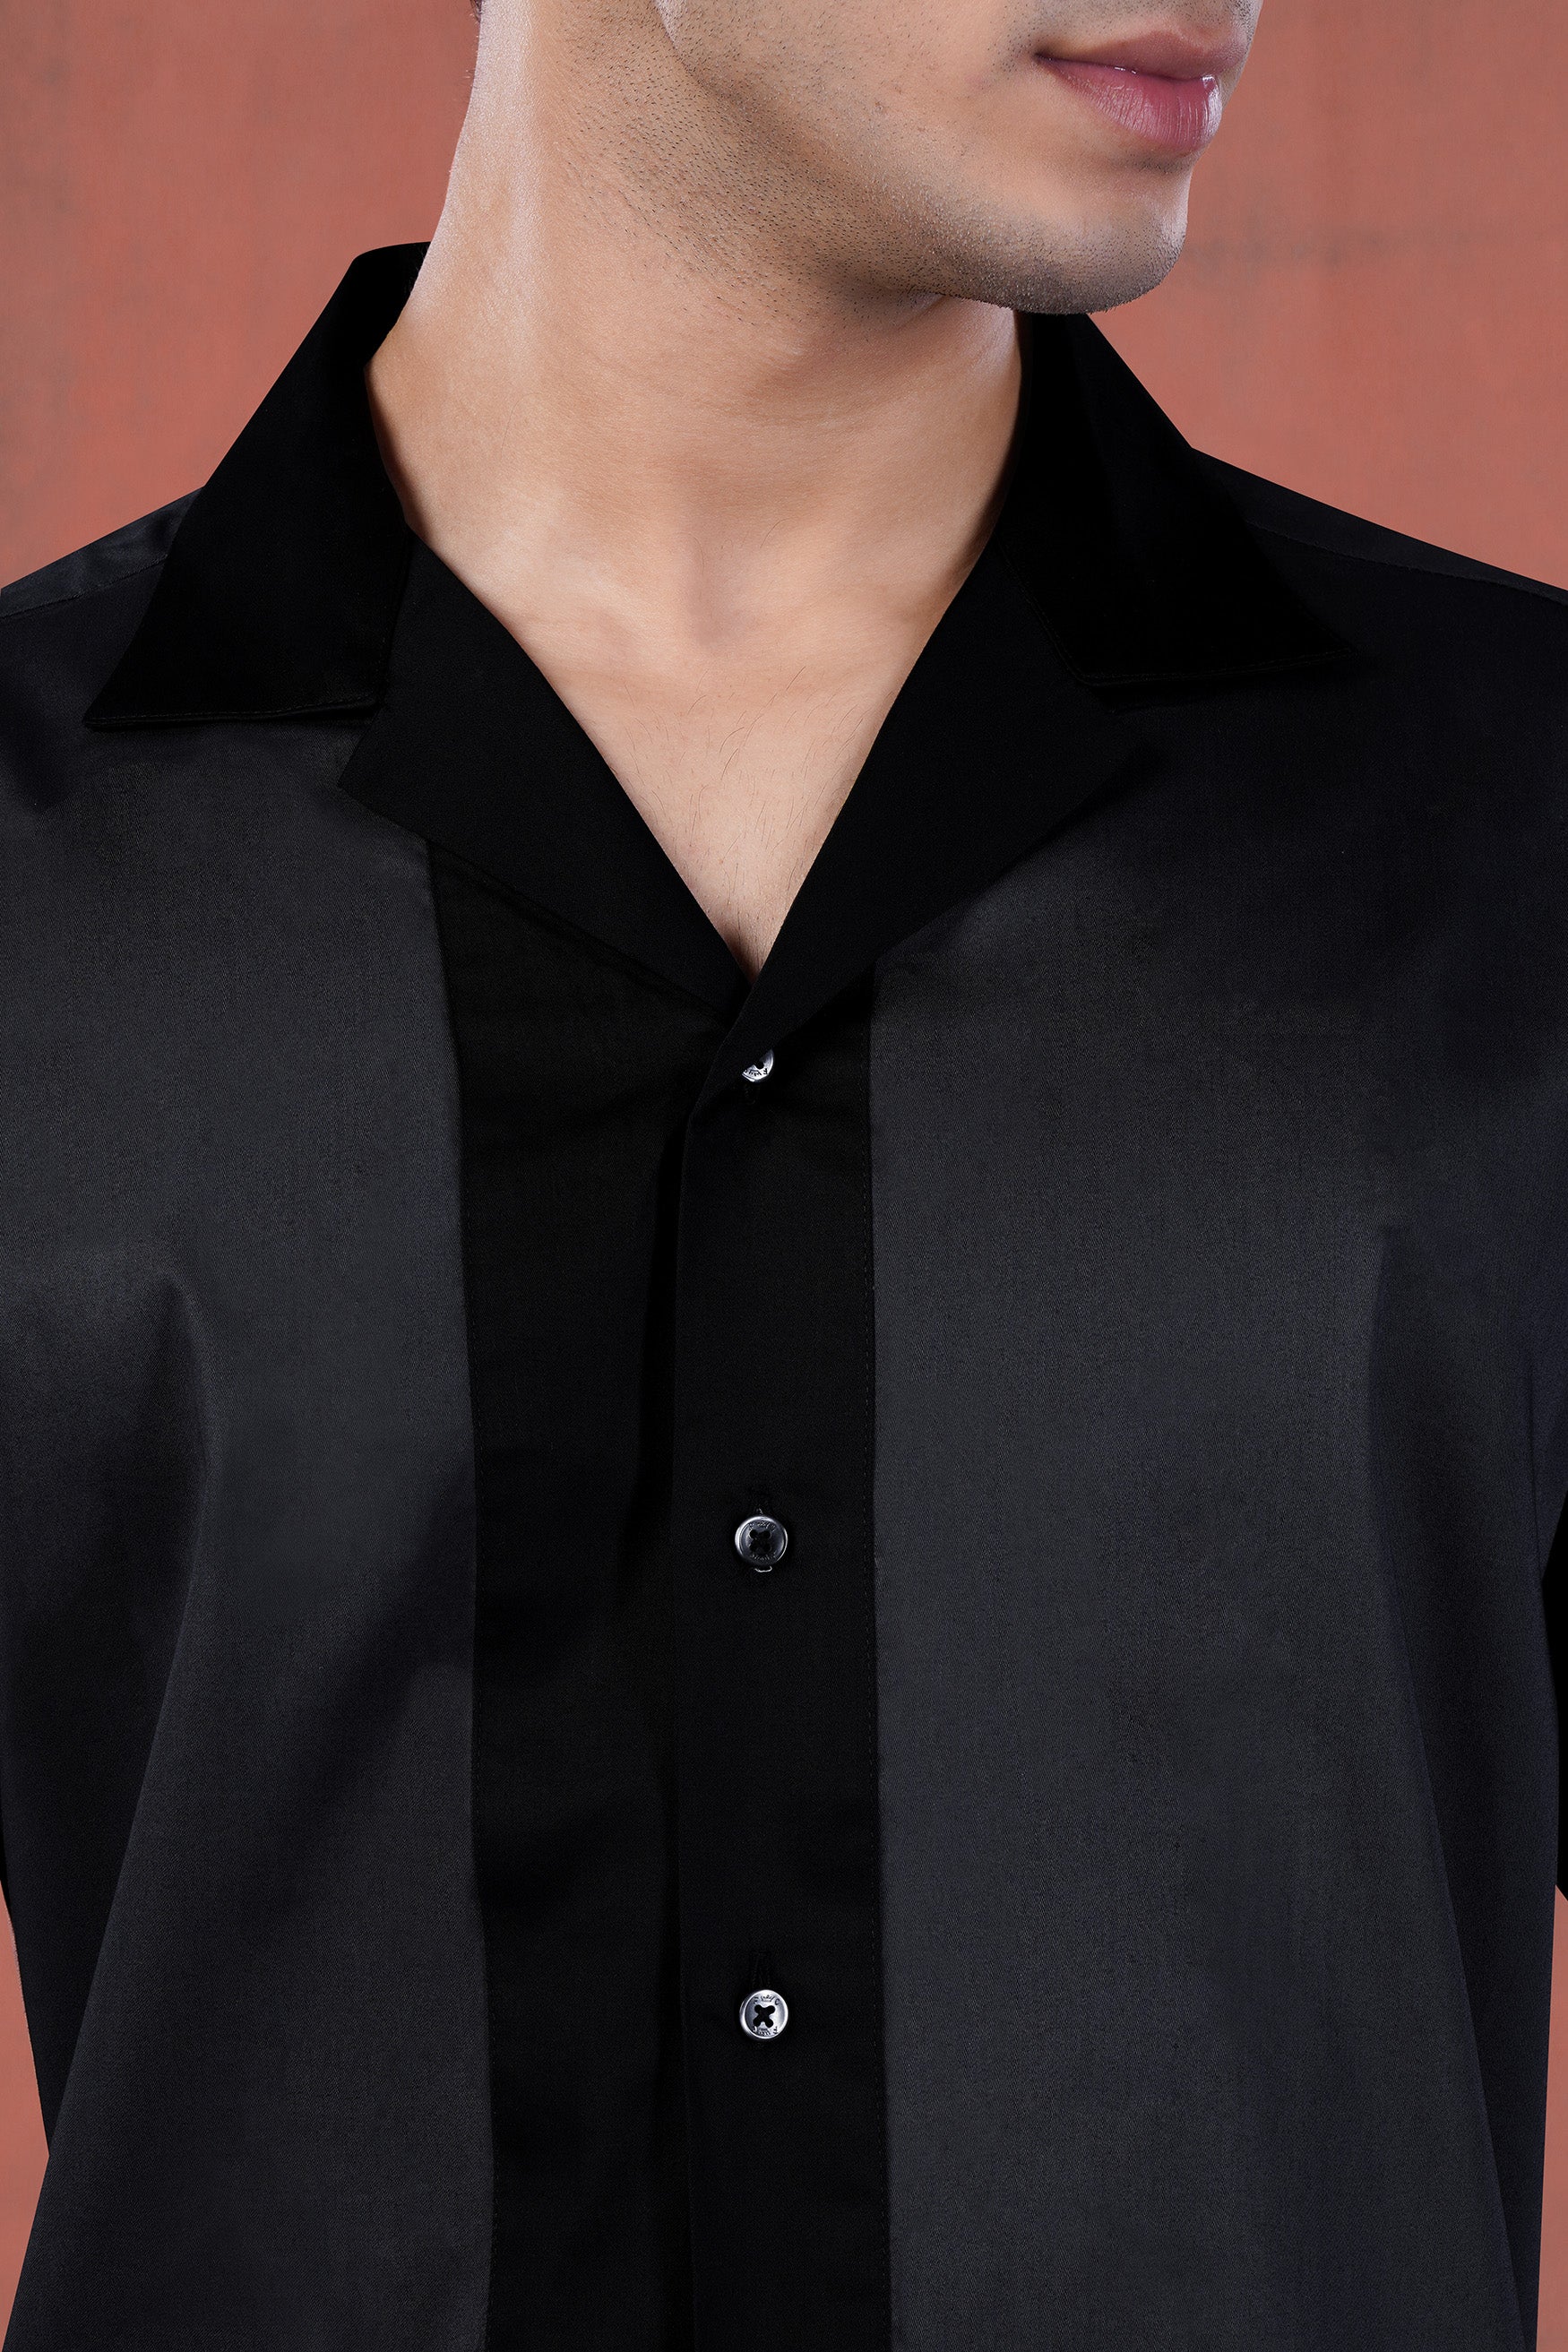 Gunmetal Gray and Black Subtle Sheen Super Soft Premium Cotton Designer Shirt